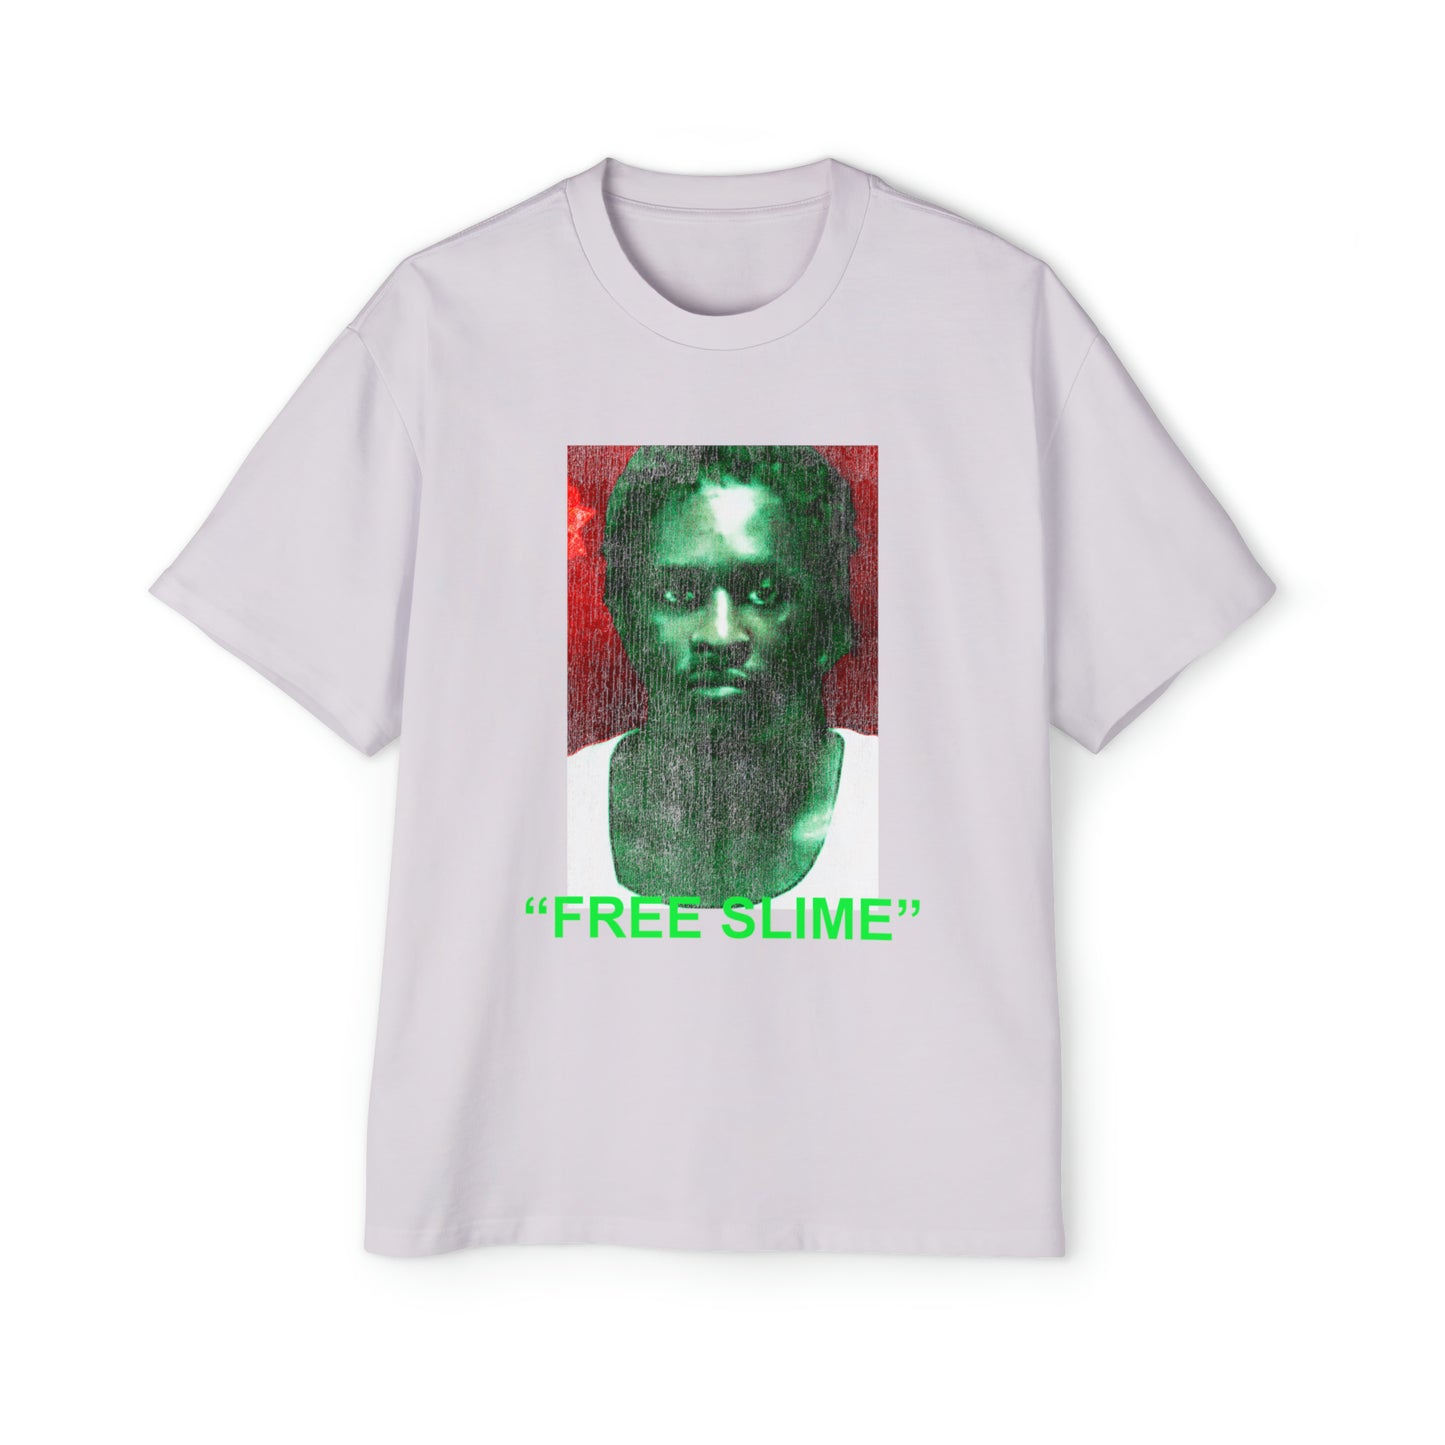 "FREE SLIME" TEE